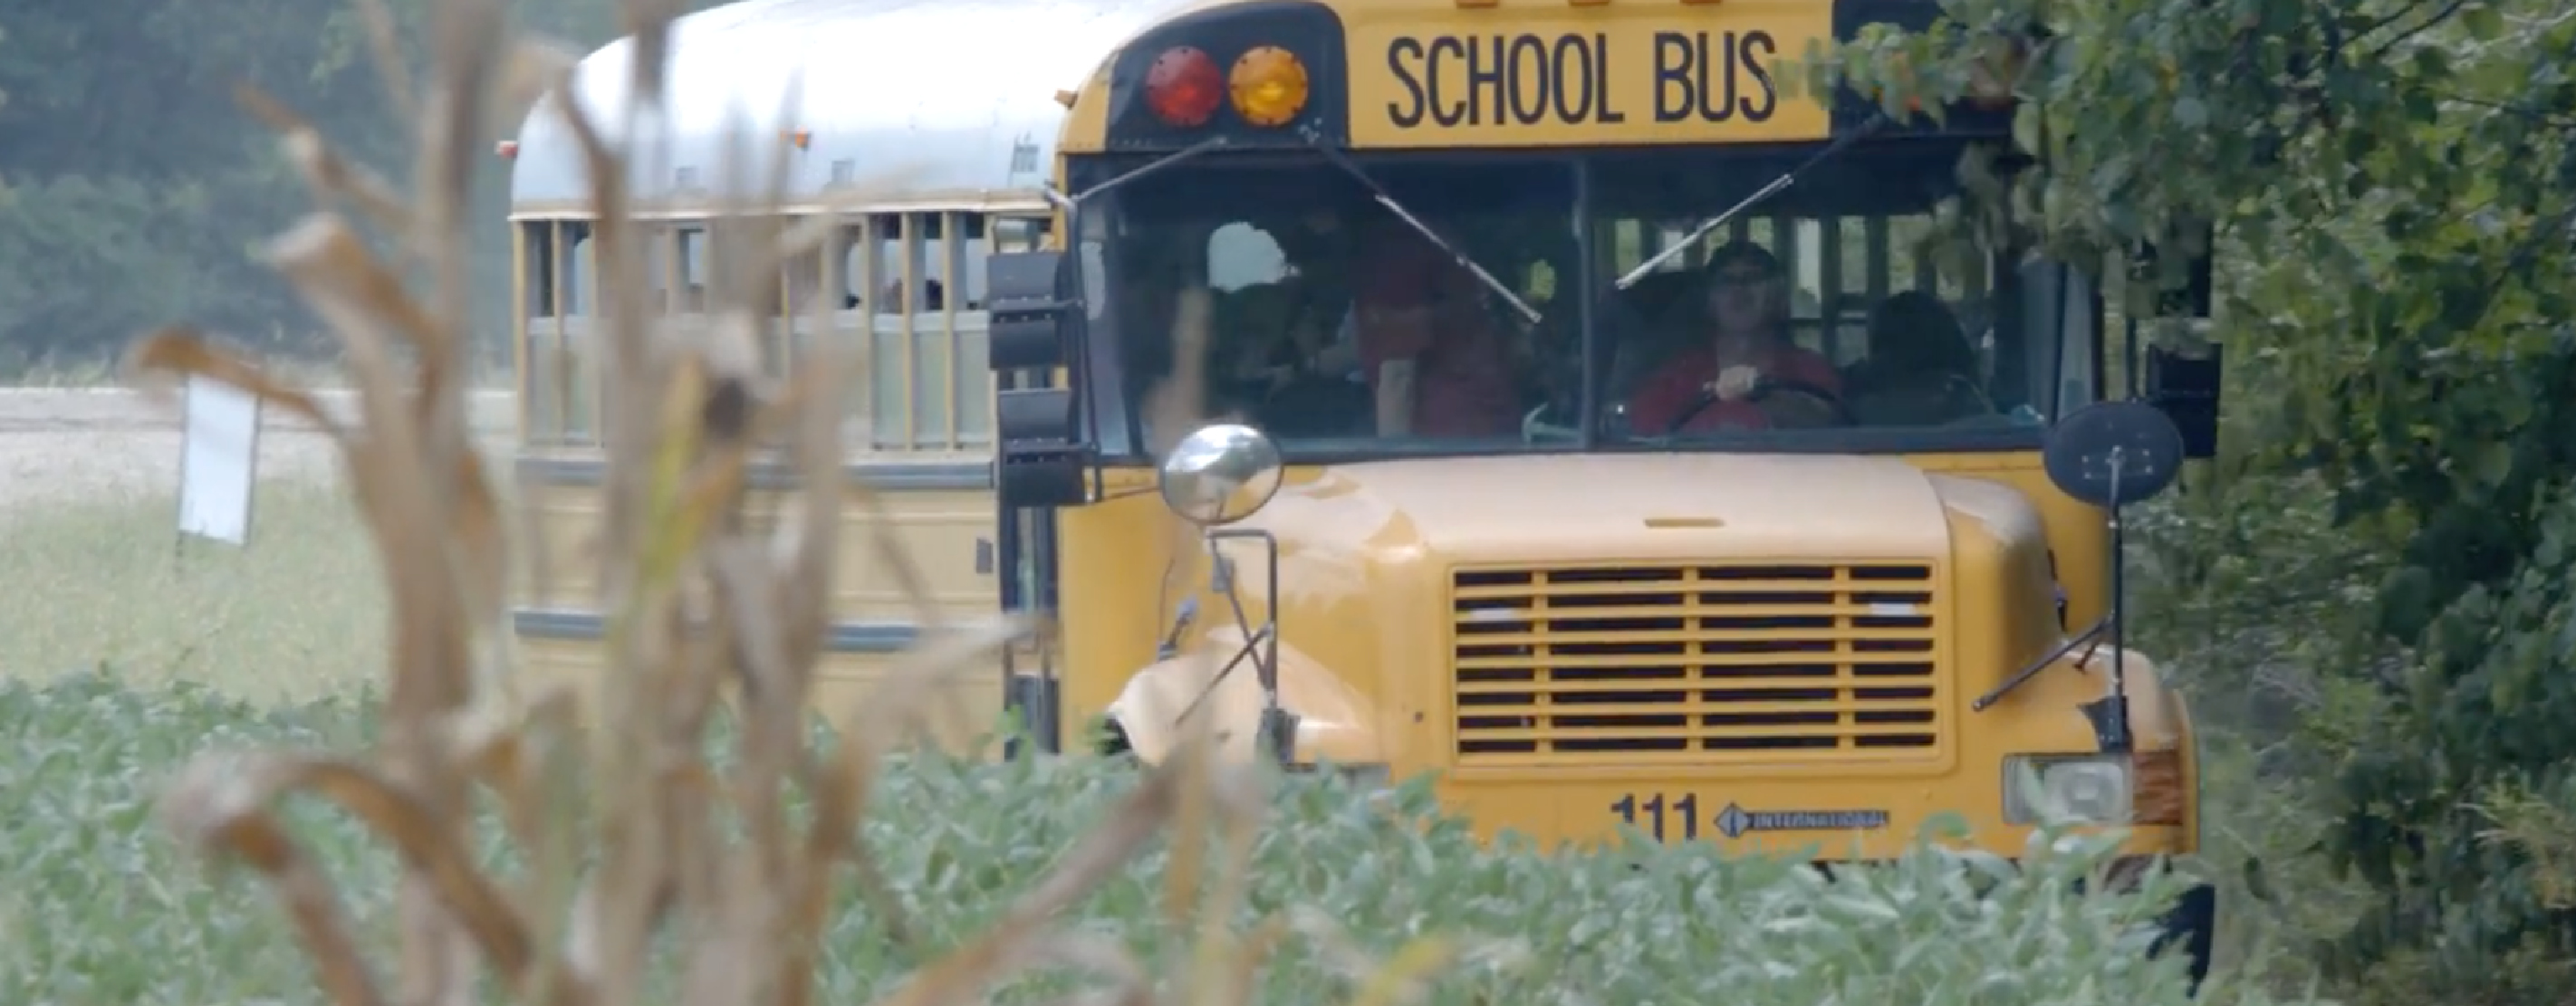 A School Bus In A Rural Area